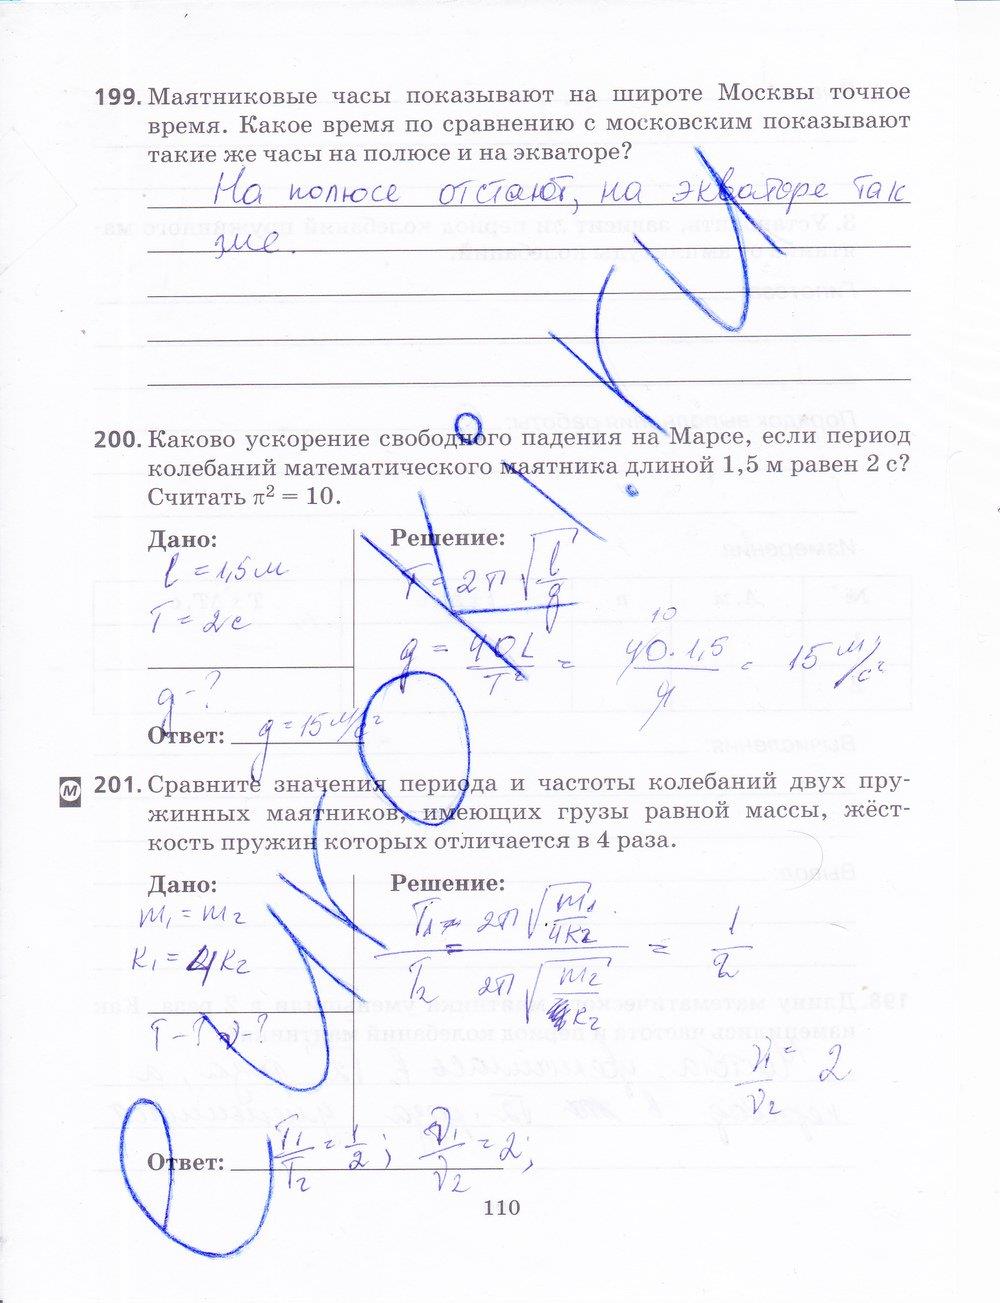 гдз 9 класс рабочая тетрадь страница 110 физика Пурышева, Важеевская, Чаругин